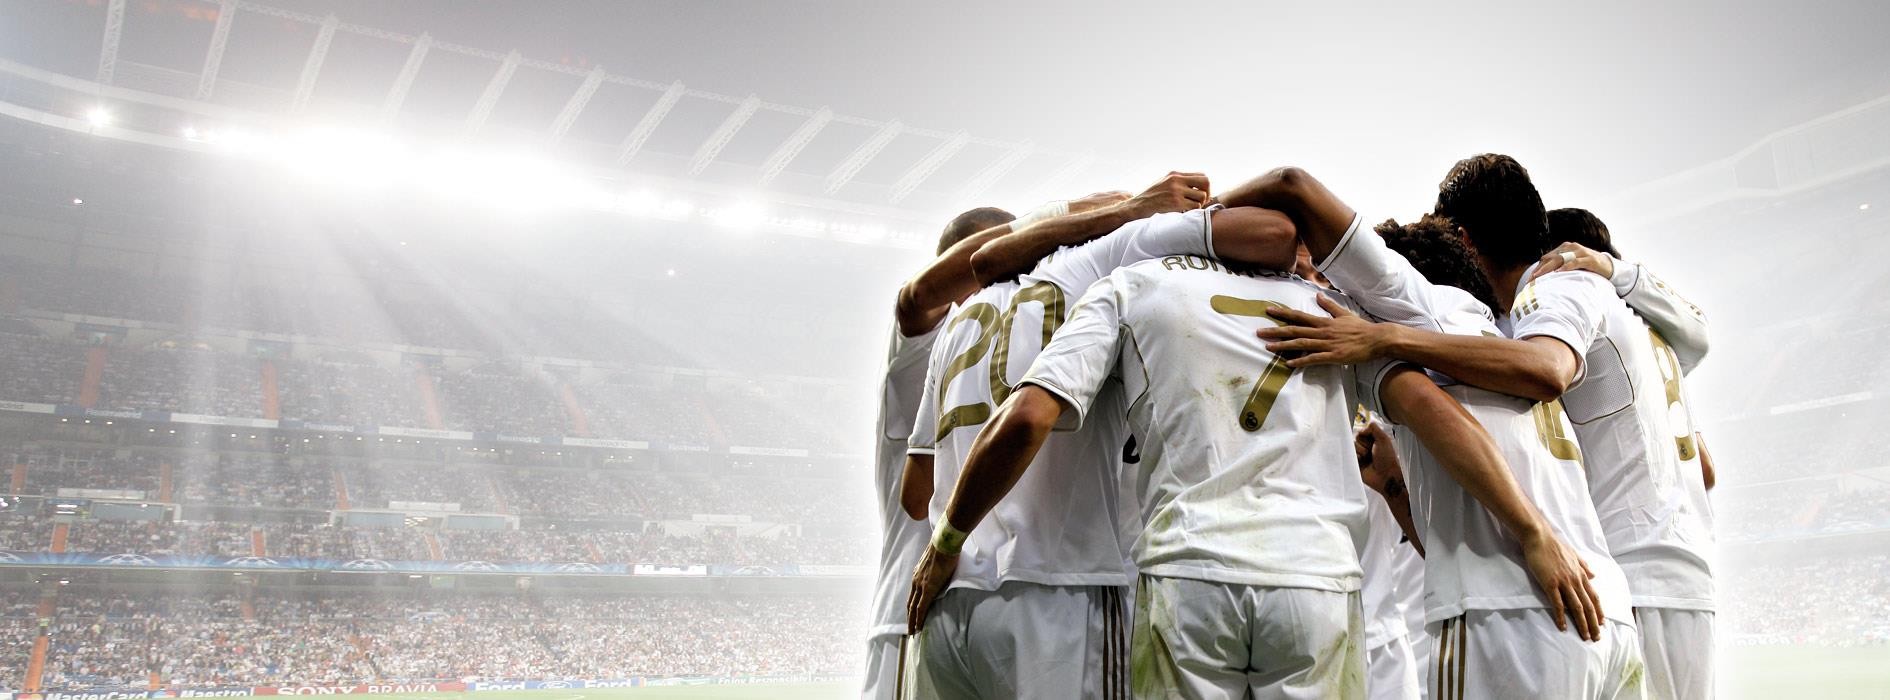 Sports Team Wallpaper Real Madrid